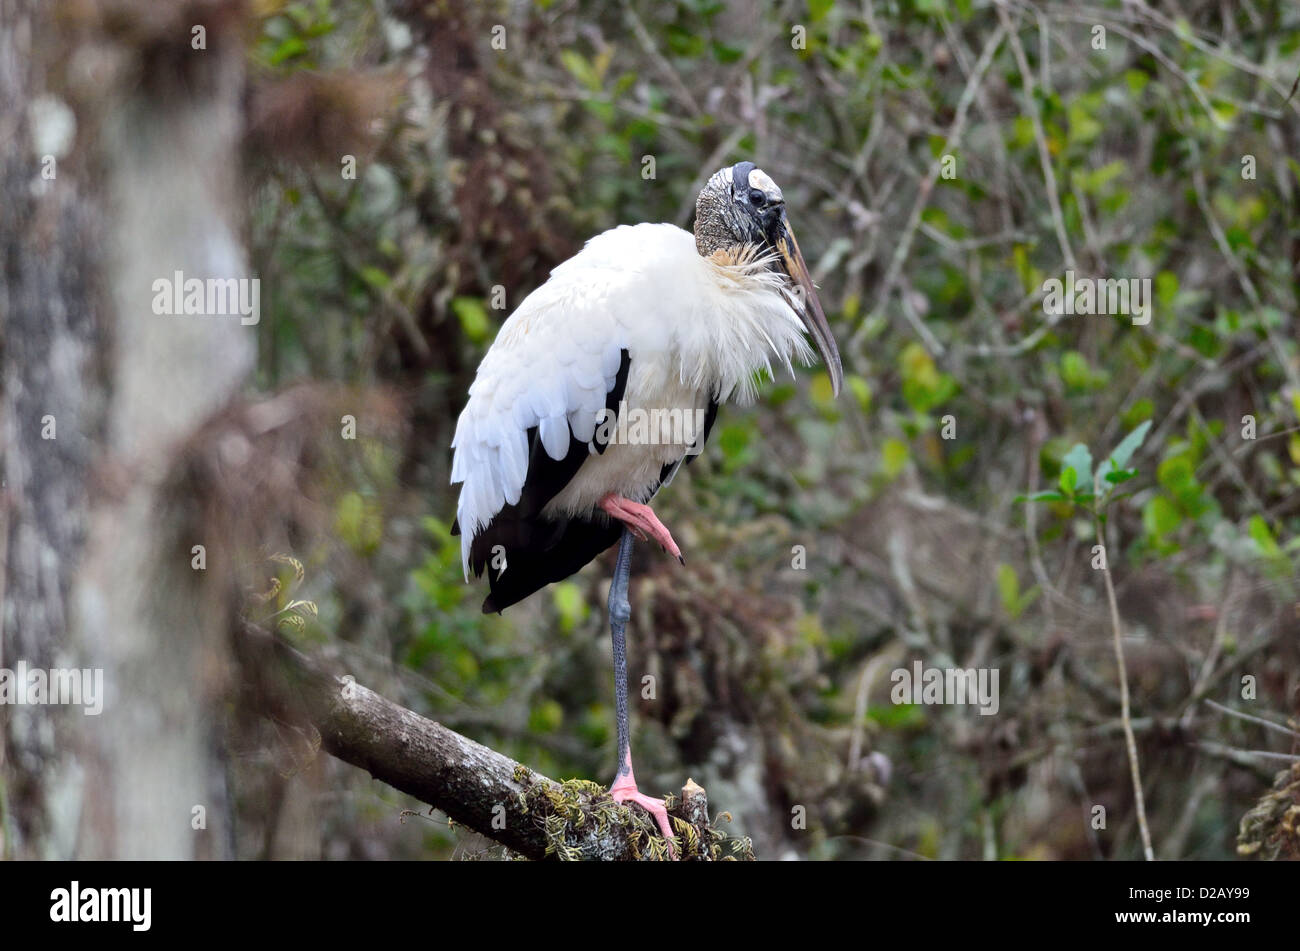 A wood stork in its natural habitat. Big Cypress National Preserve, Florida, USA. Stock Photo